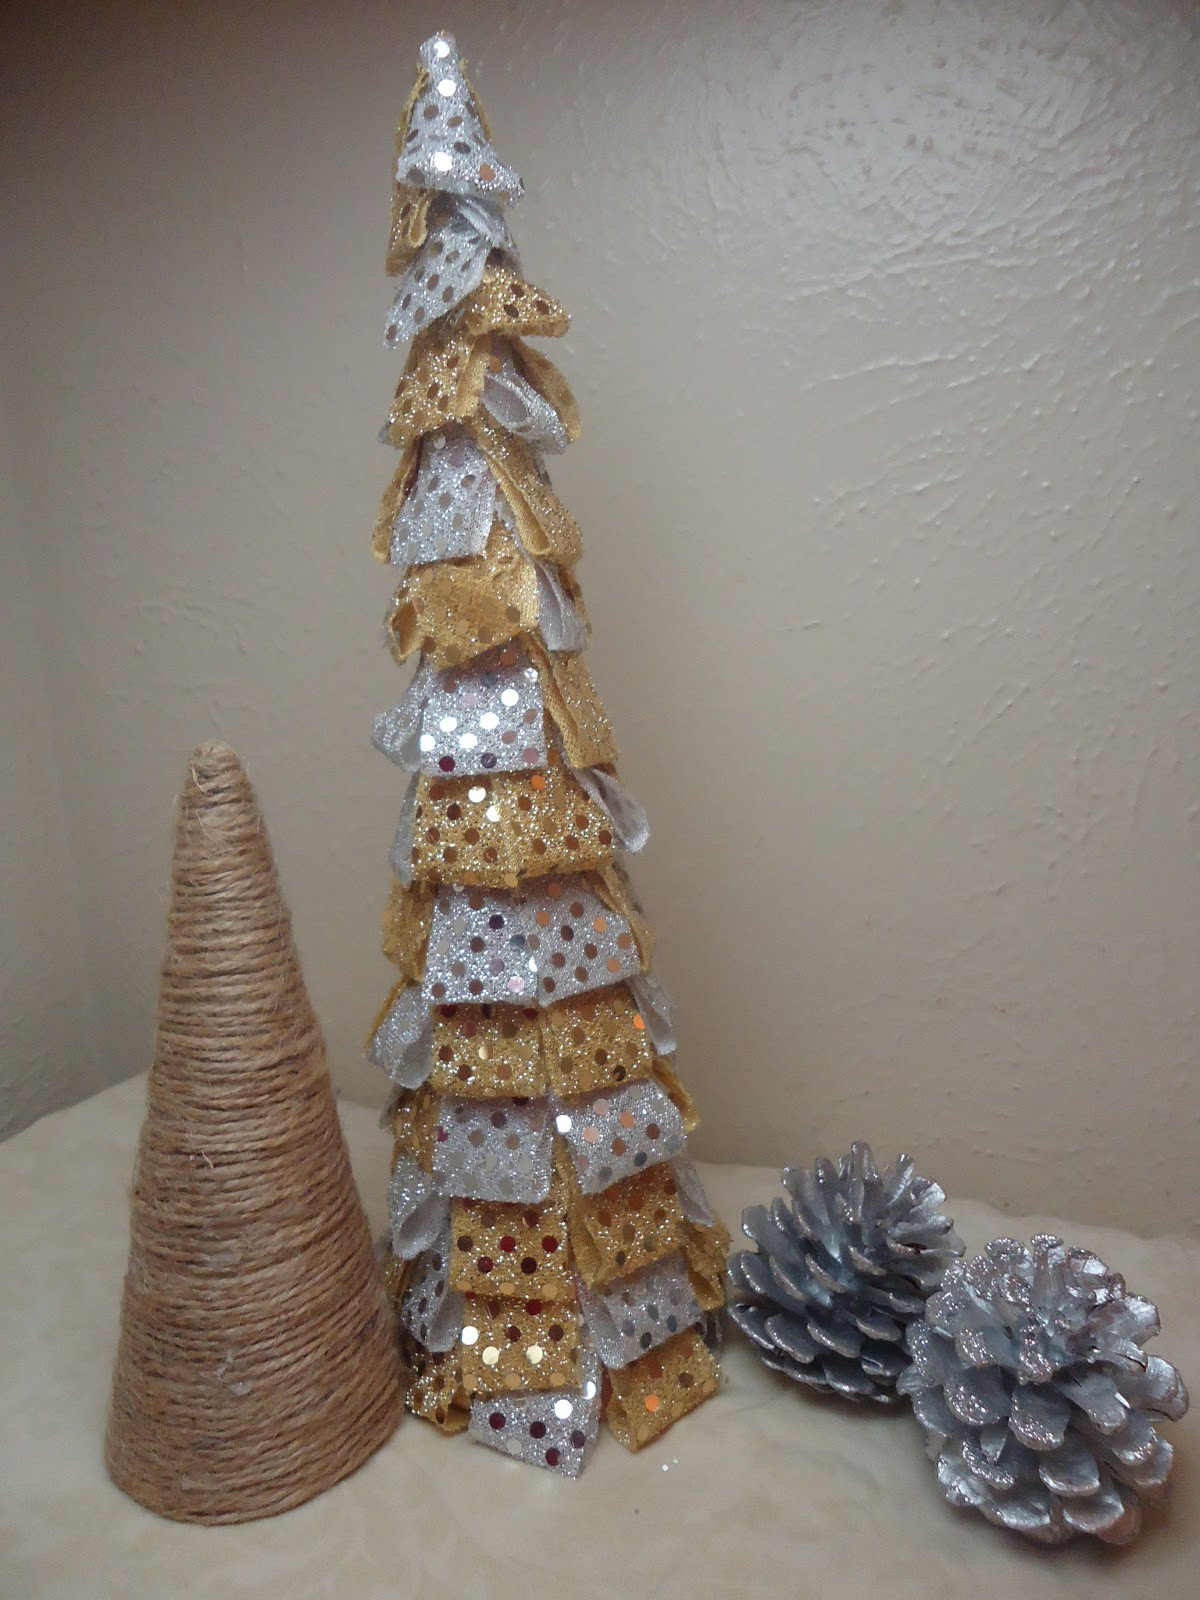 DIY Cone Christmas Trees
 Frugal Home Design DIY Cone Shaped Christmas Trees